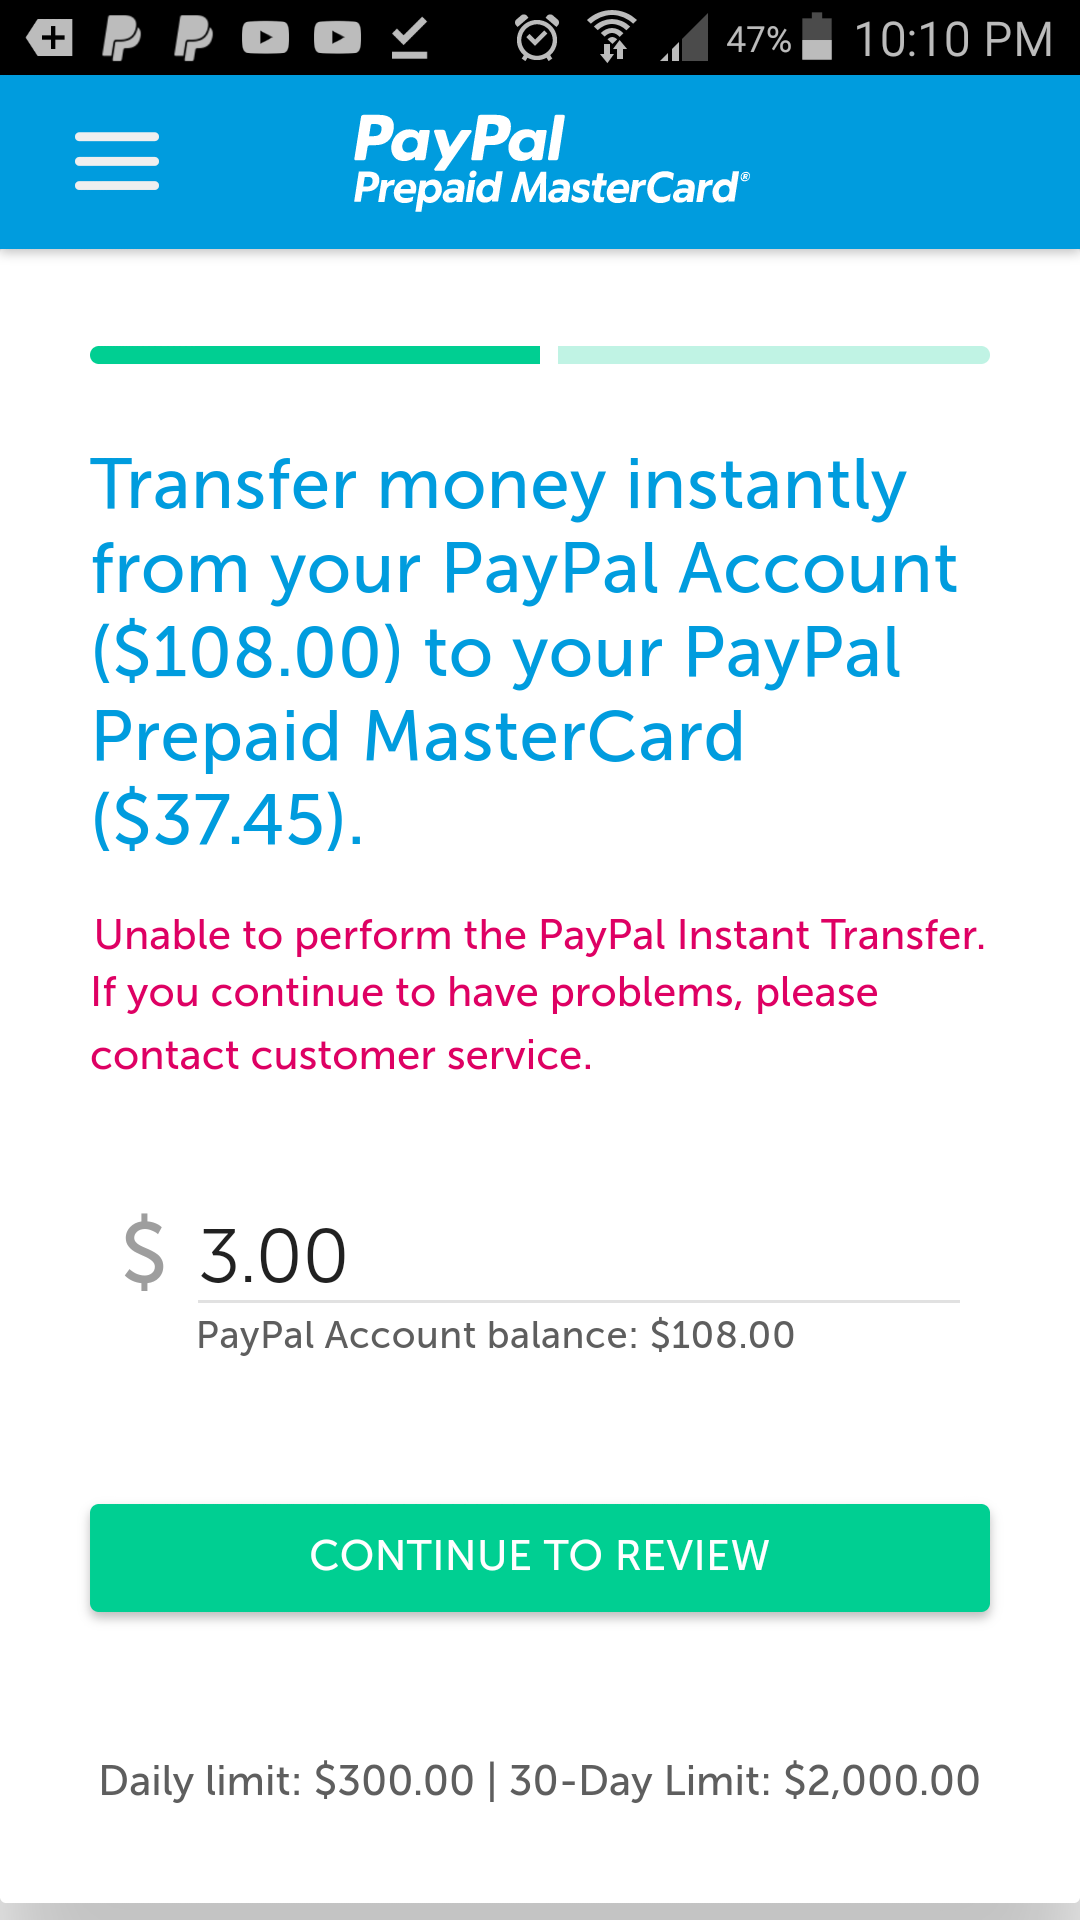 paypal prepaid customer service